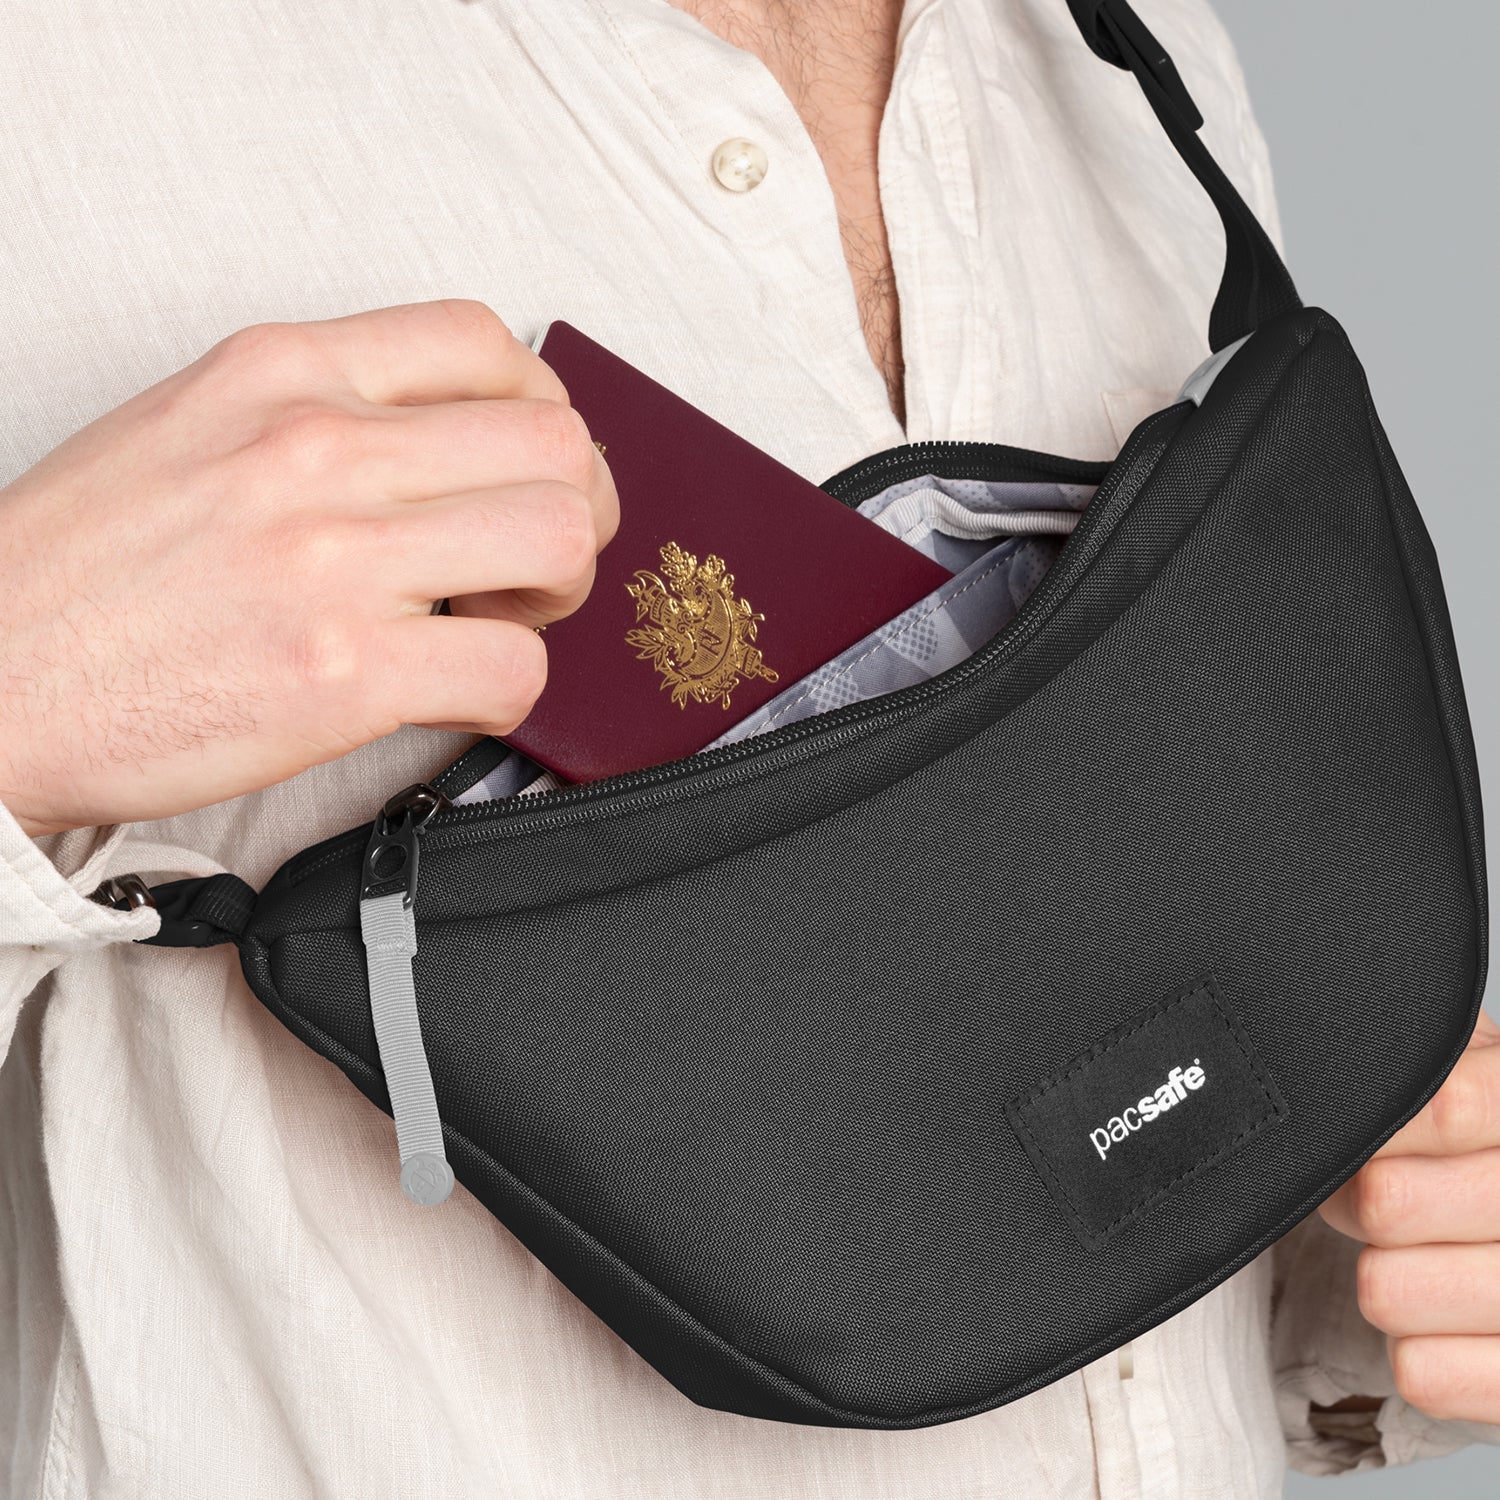 Saintrygo 2 Pieces Hide Bra Wallet Pickpocket Proof Wallet Travel Pouches  Under Clothes Money Belt Pouch for Travel Pouch Secret Pocket for Passport